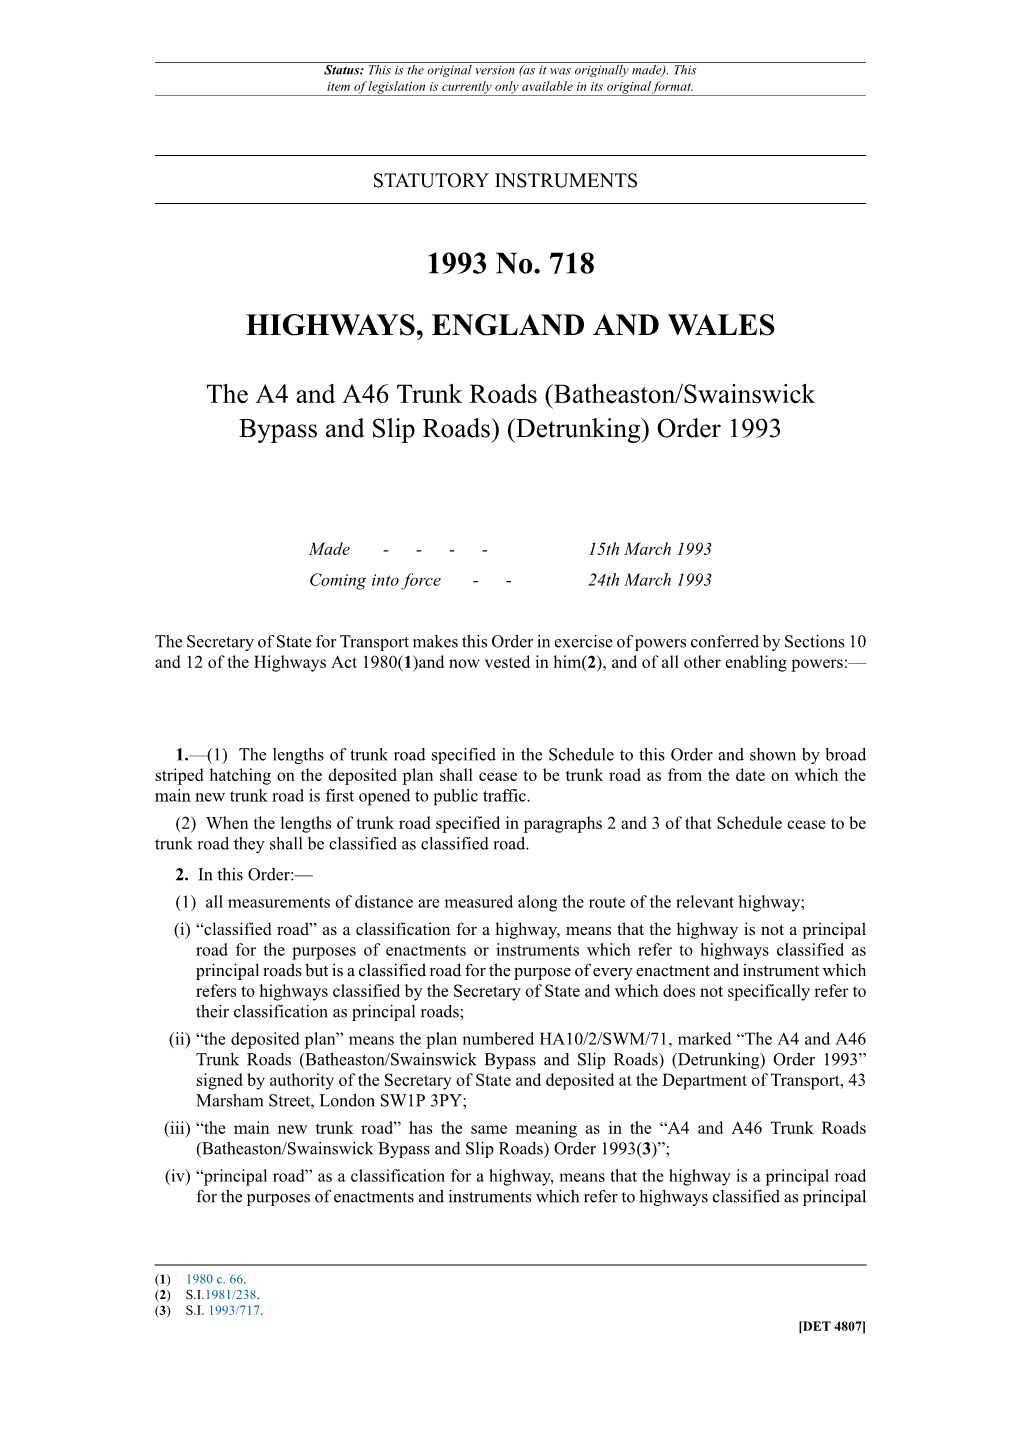 Batheaston/Swainswick Bypass and Slip Roads) (Detrunking) Order 1993